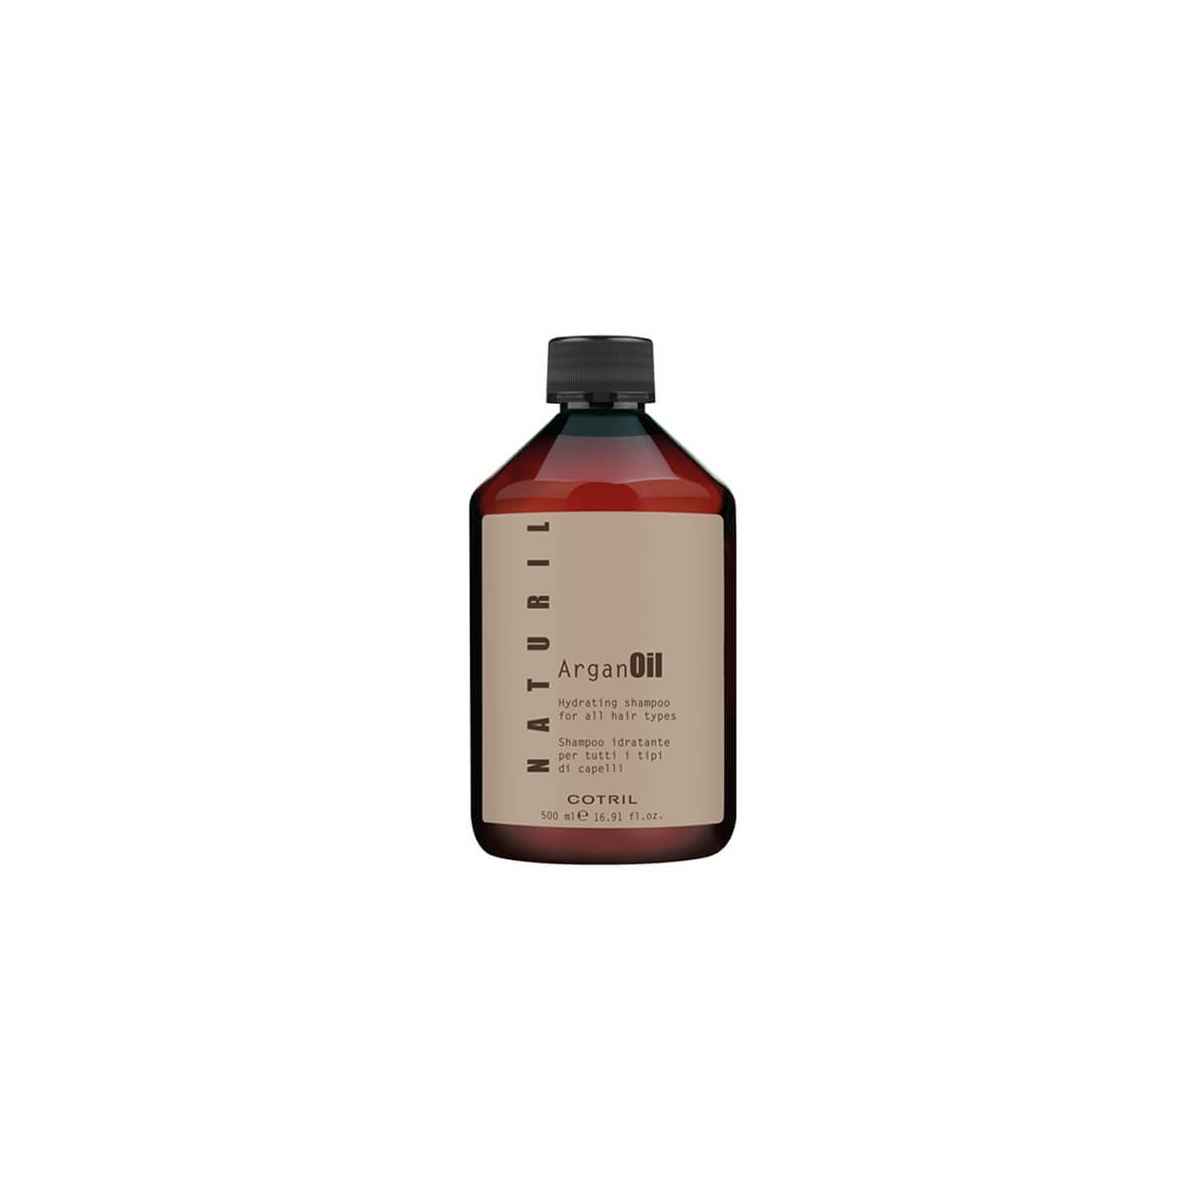 COTRIL - NATURIL ARGAN OIL - Hydrating shampoo (500ml) Shampoo idratante